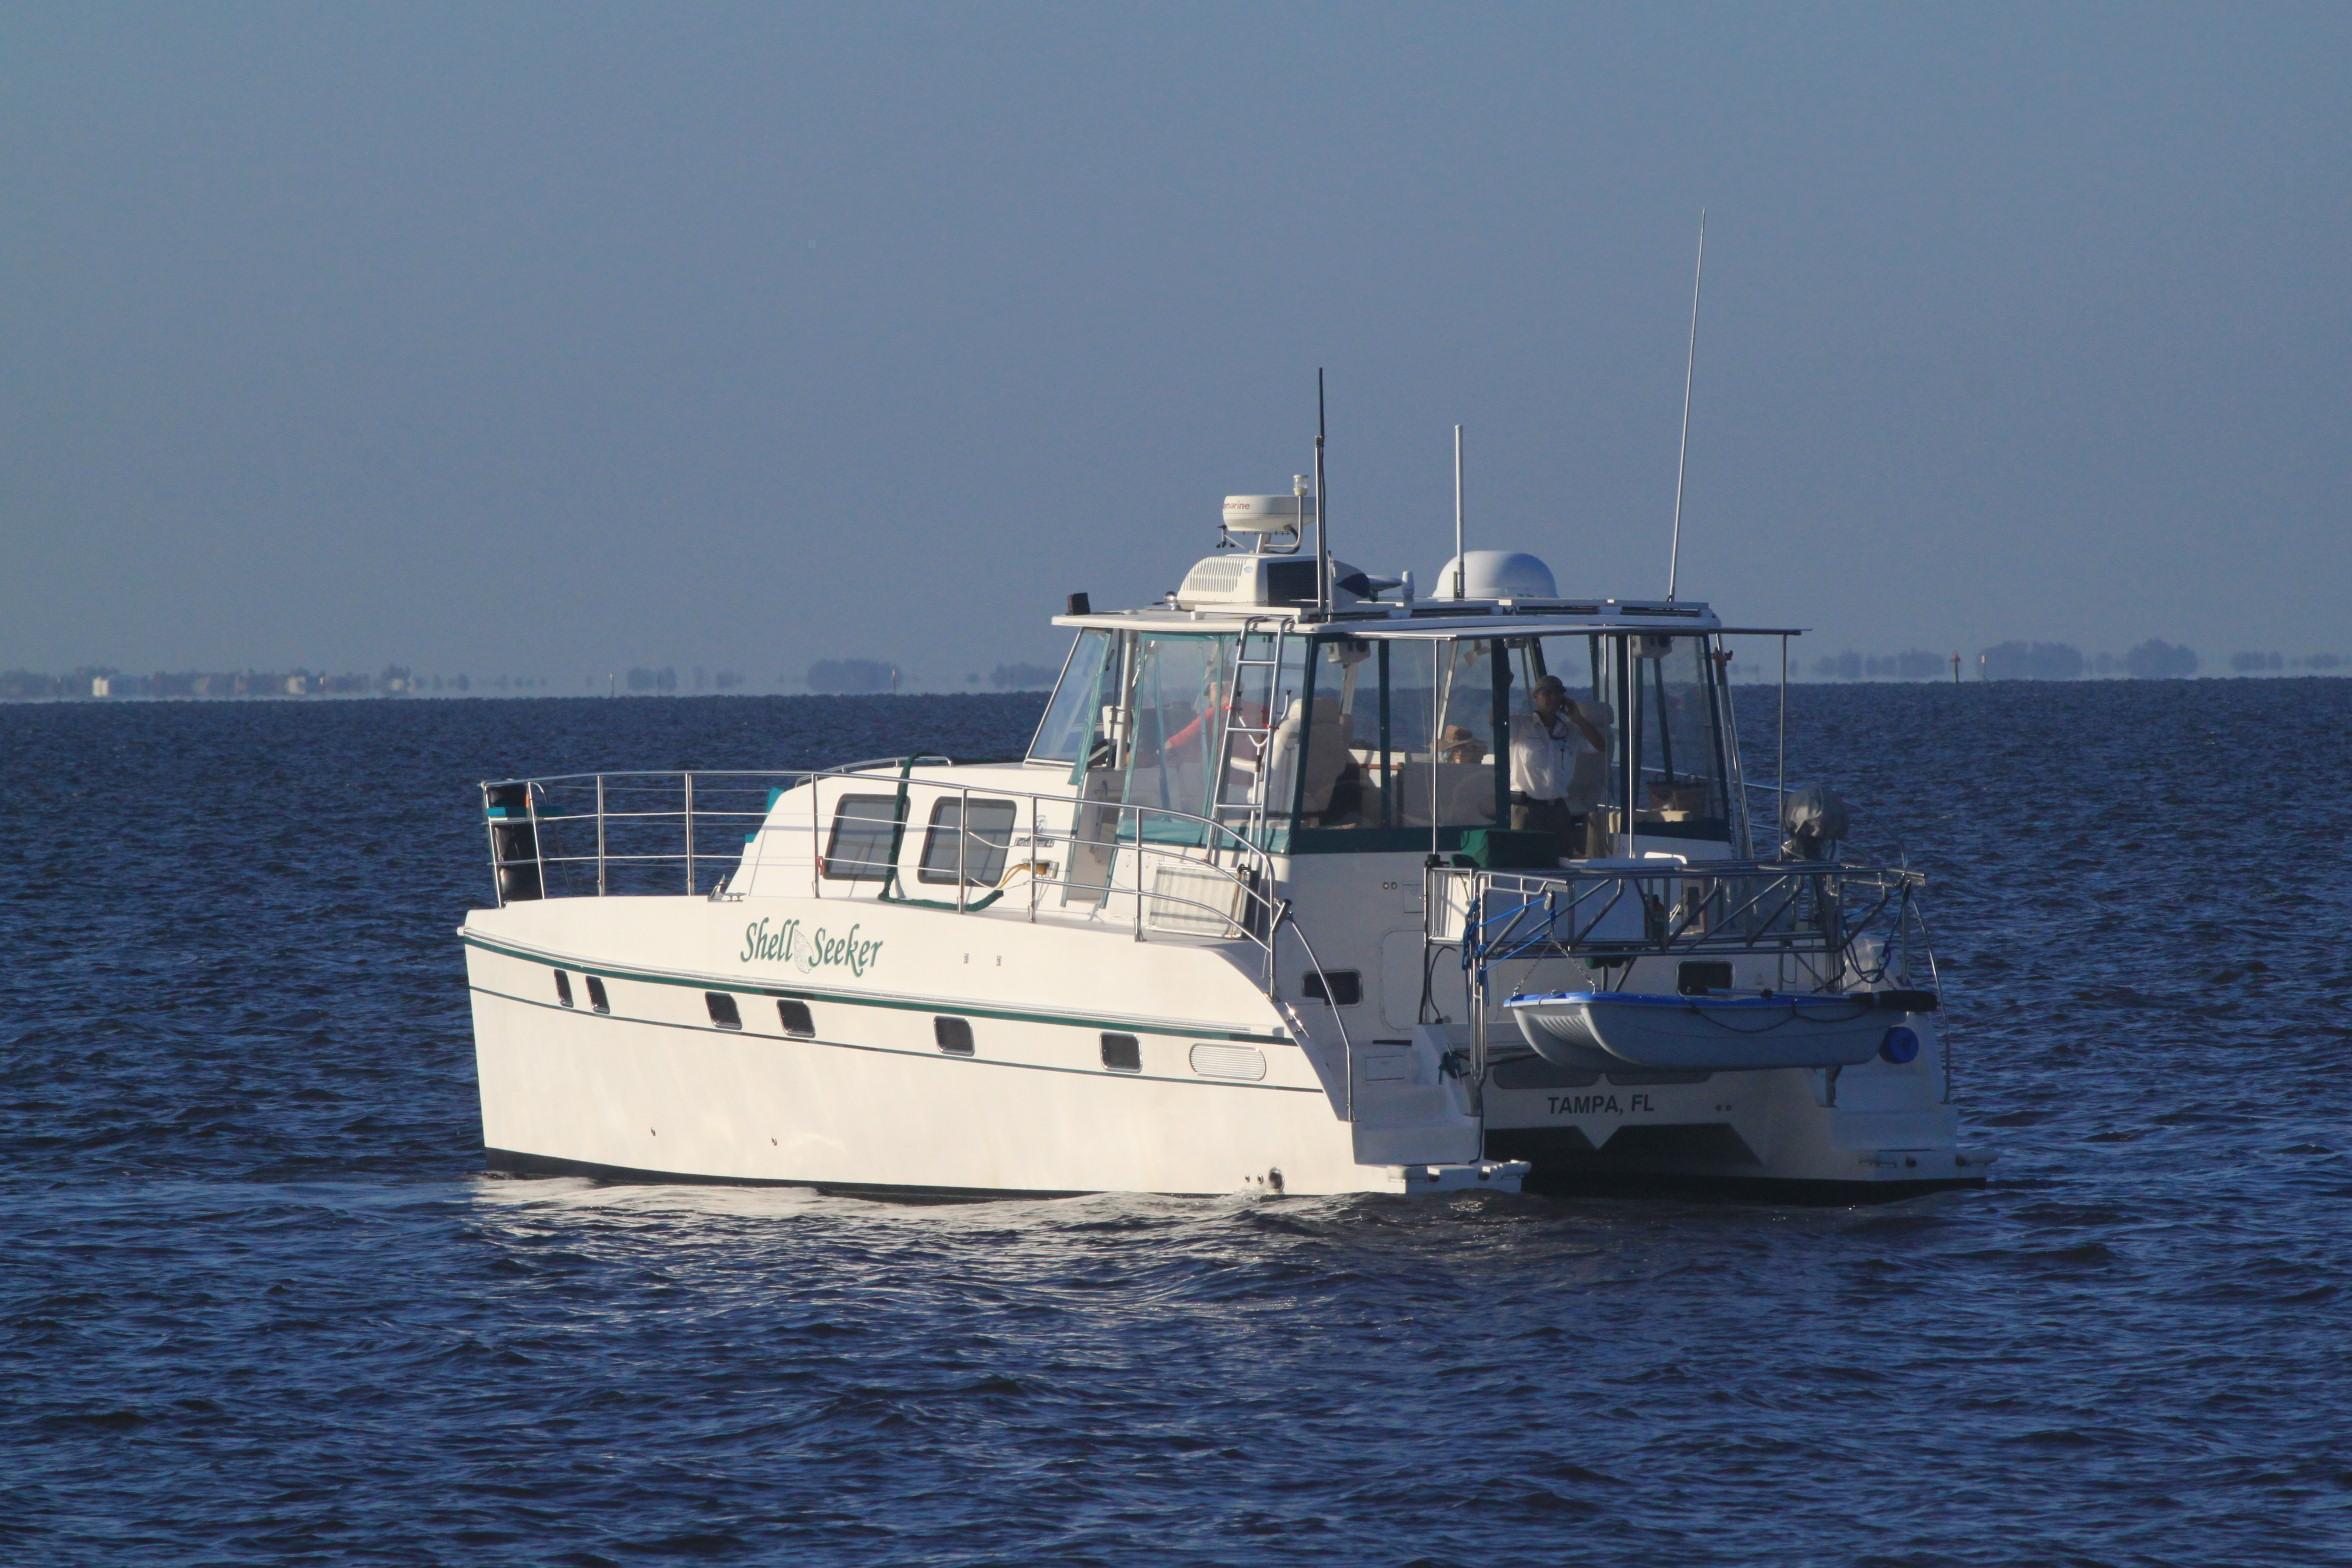 Endeavour Trawlercat 44, Tampa